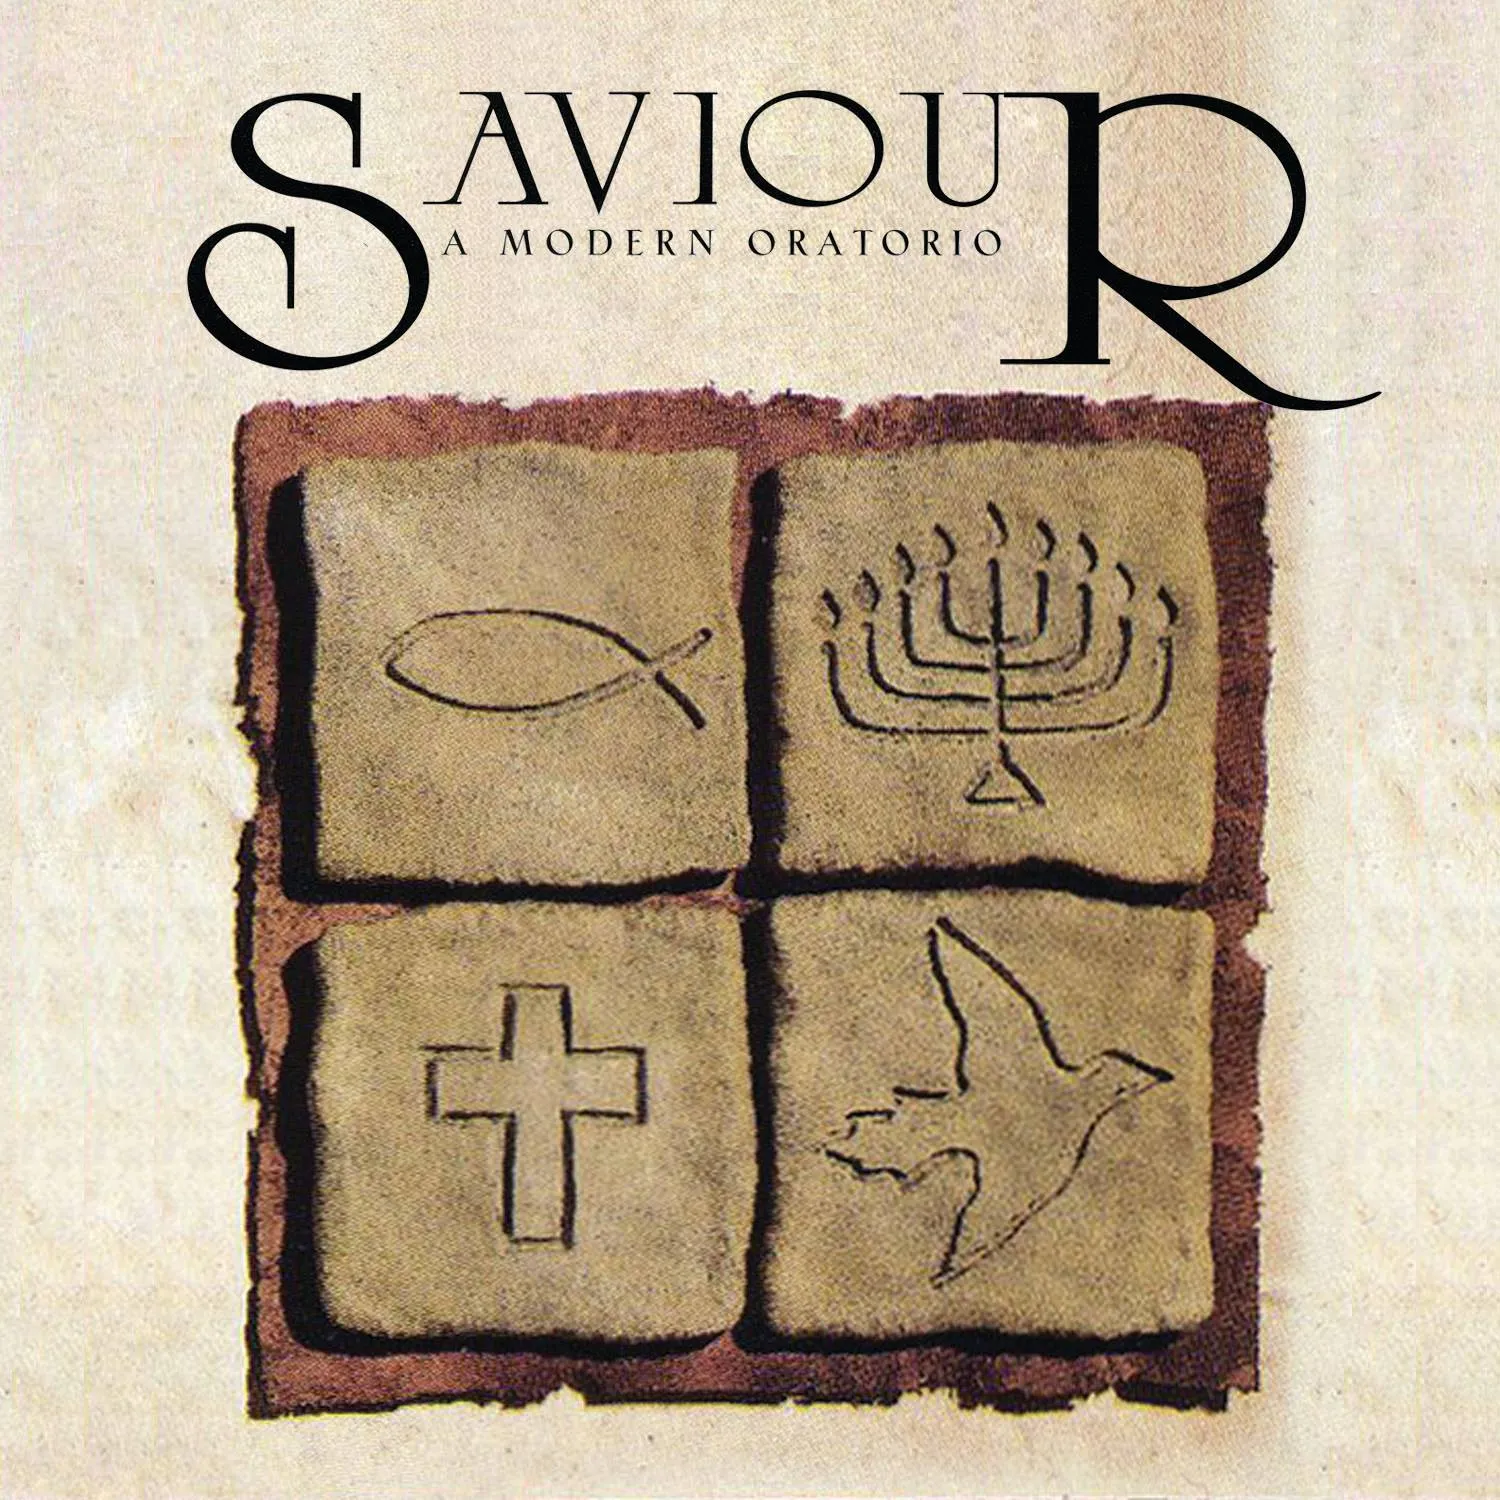 Saviour – A Modern Oratorio